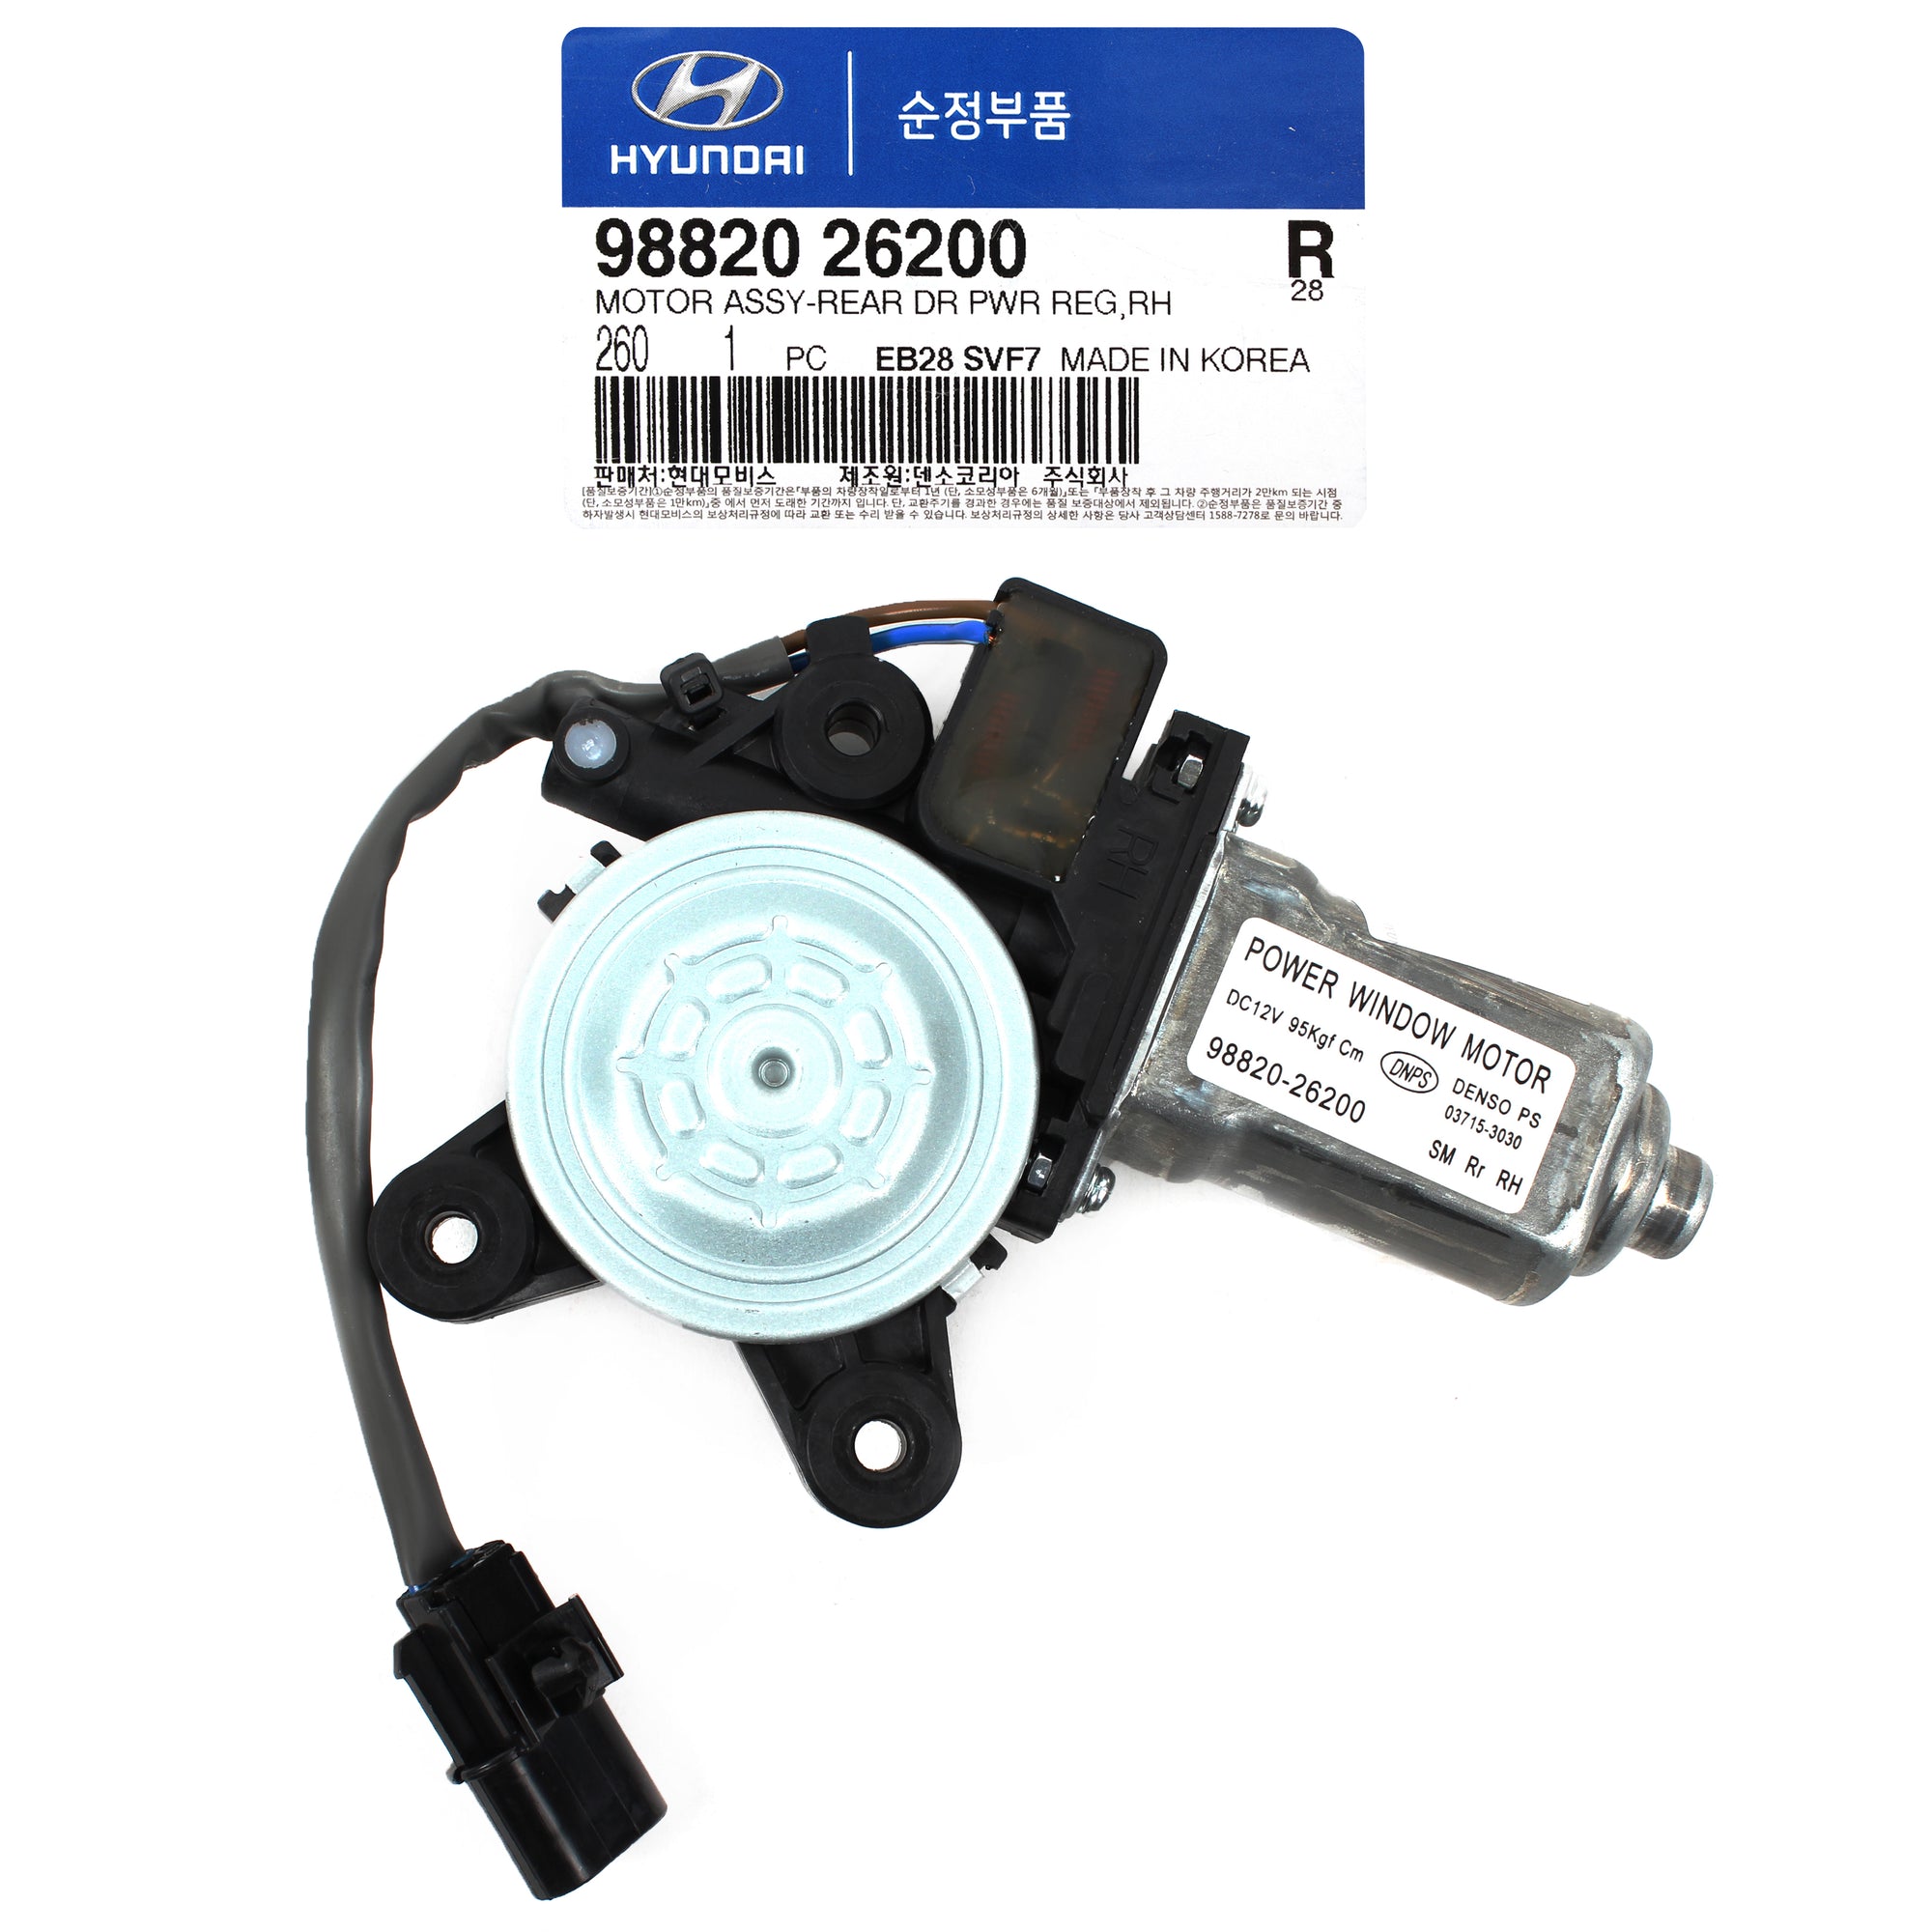 GENUINE Power Window Motor REAR RIGHT for 01-06 Hyundai Santa Fe OEM 9882026200